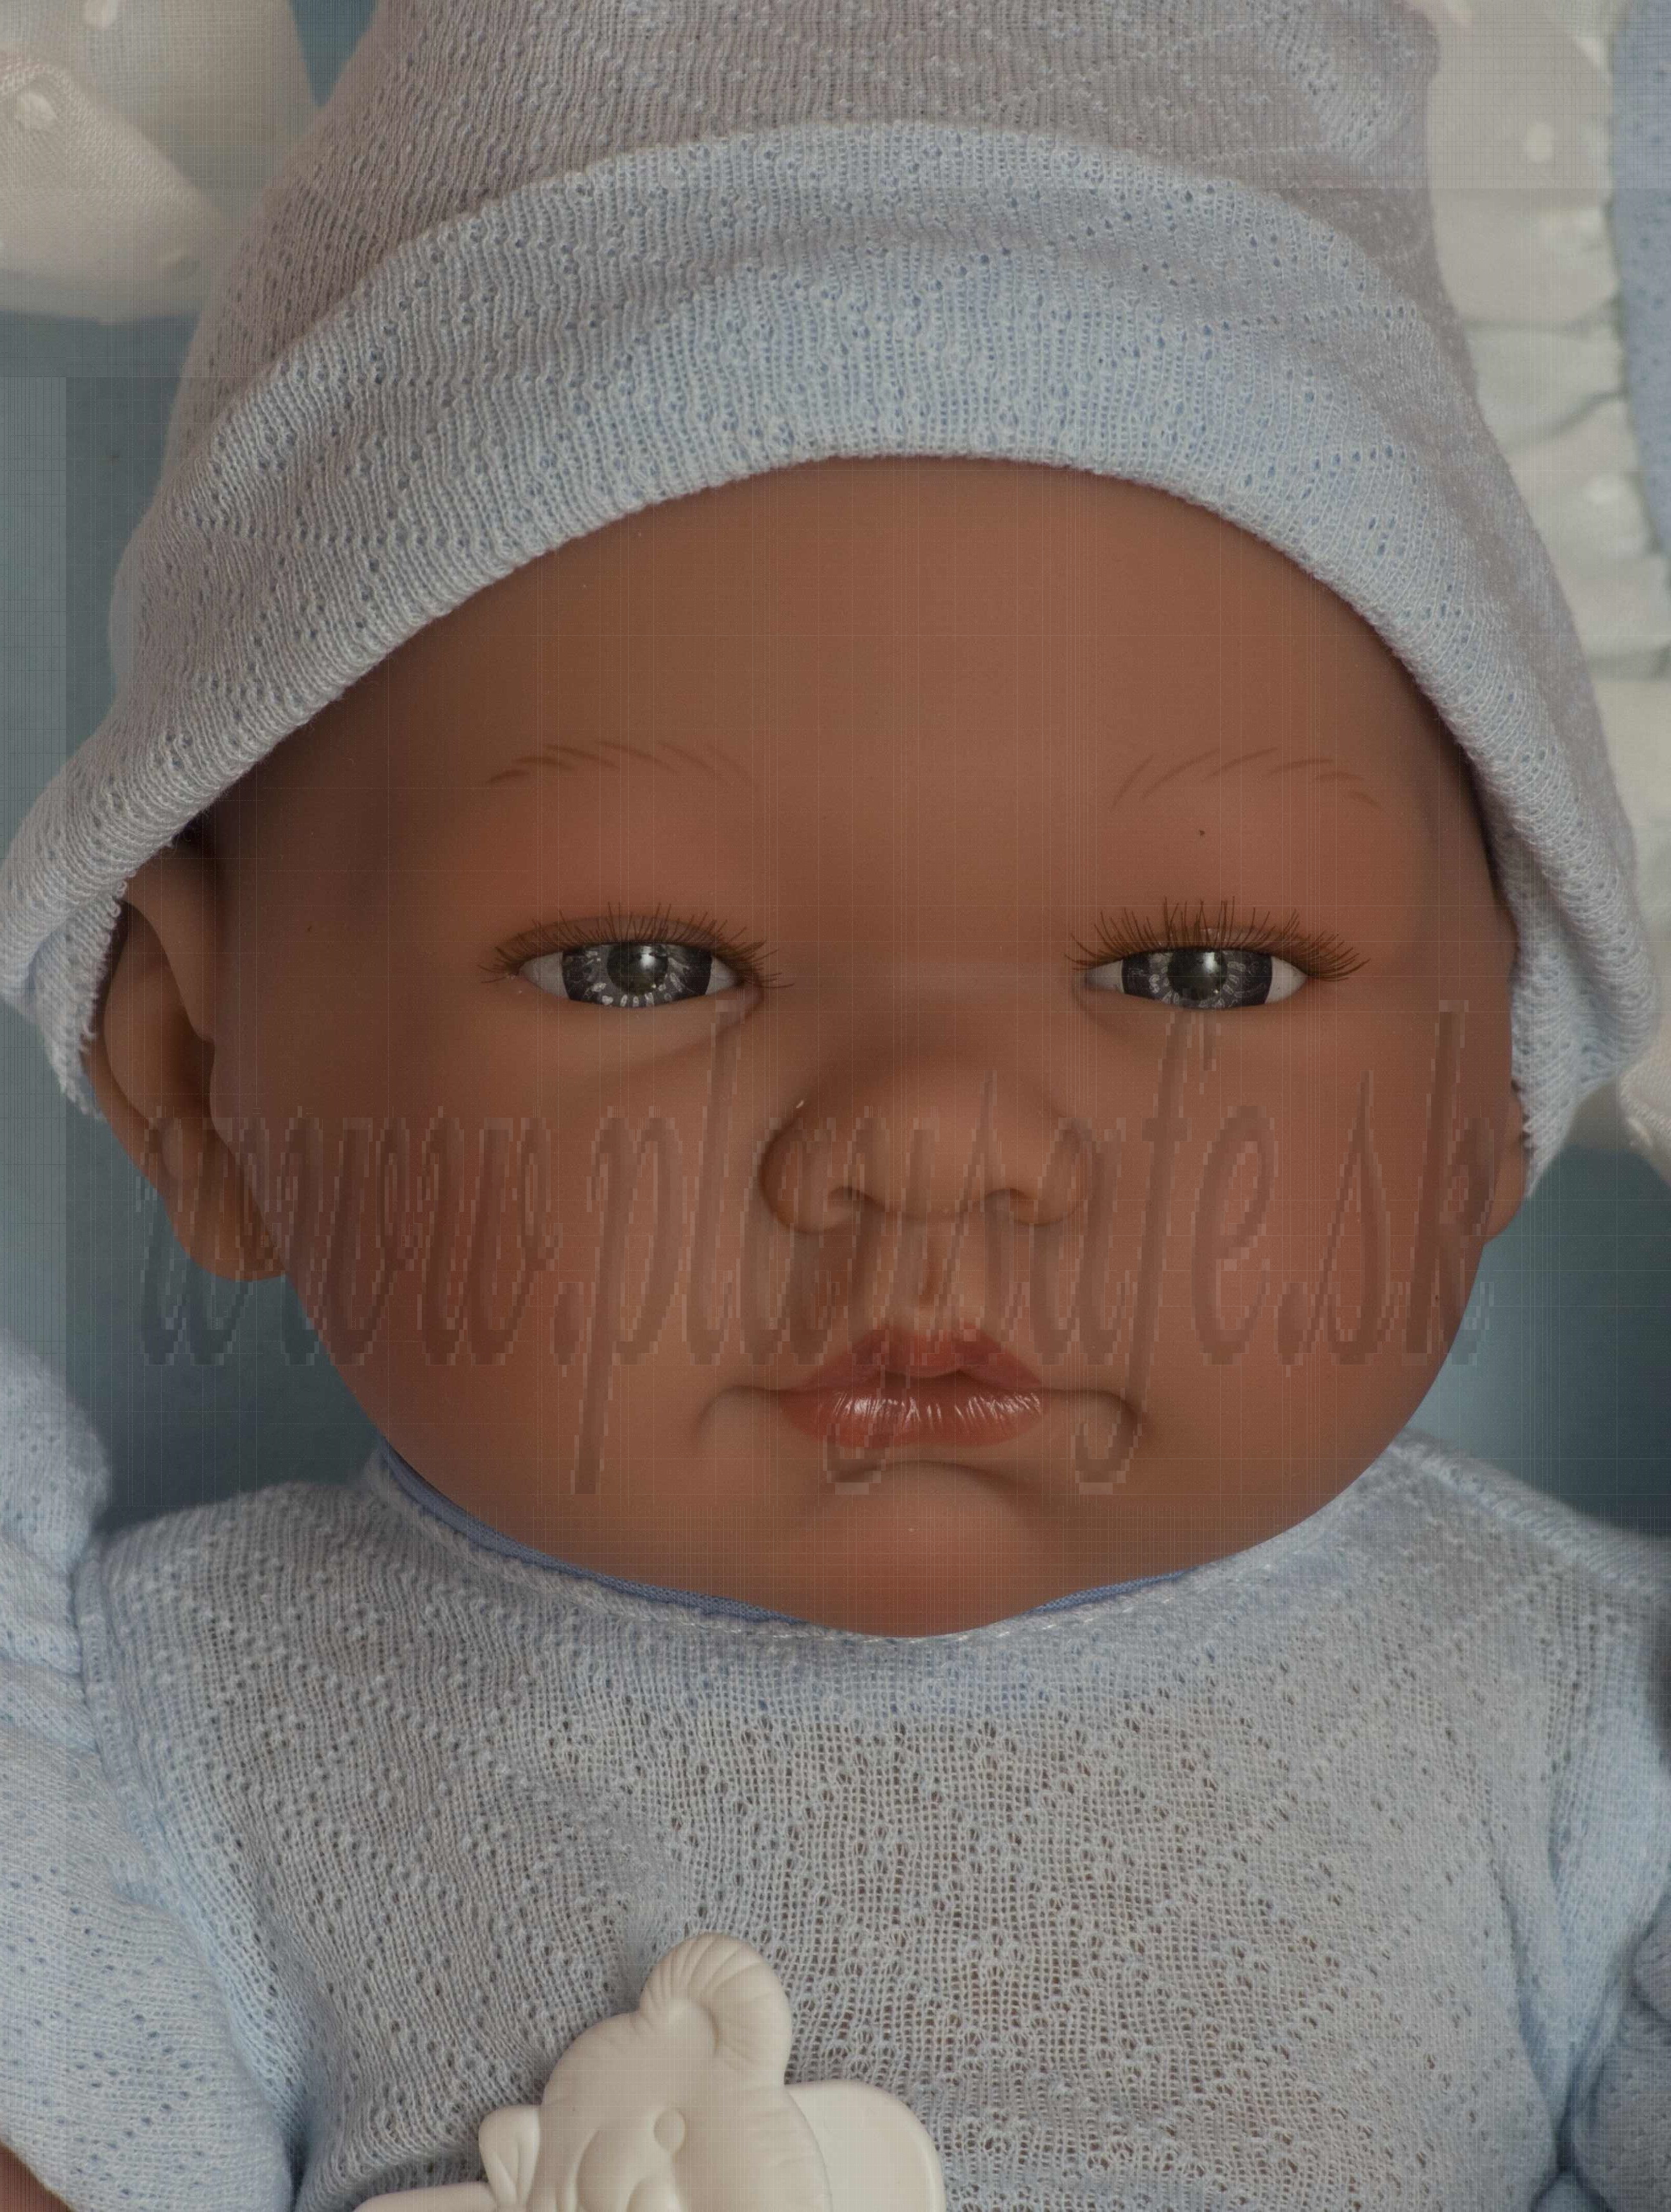 Asivil Baby Doll Pablo, 43cm in sleeping bag